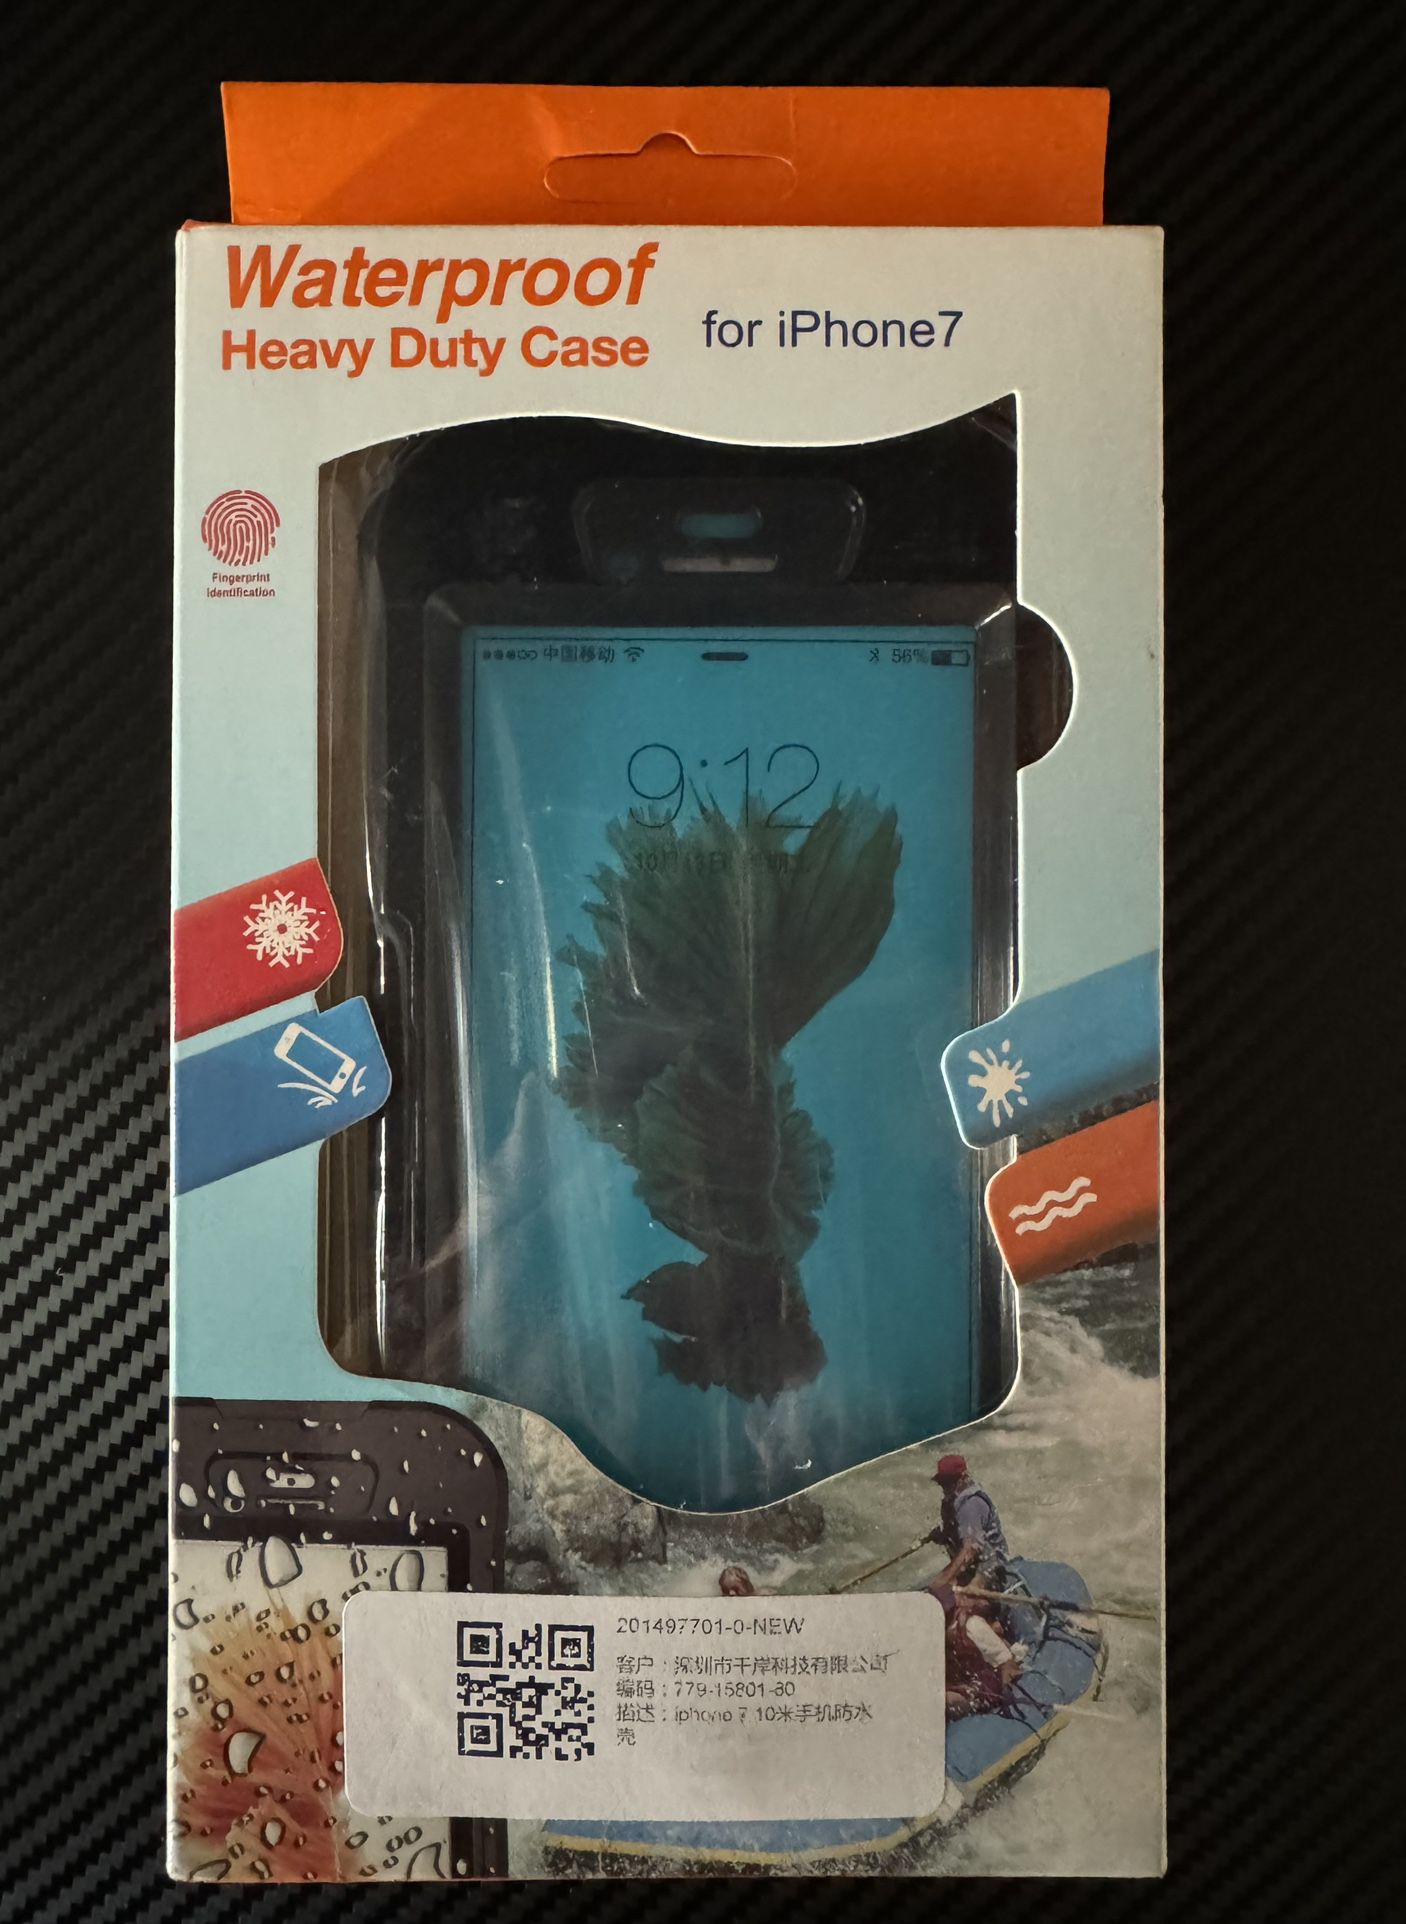 Brand New Waterproof Heavy Duty Case iPhone 7 Black $8 !!!ACCEPTING OFFERS!!!